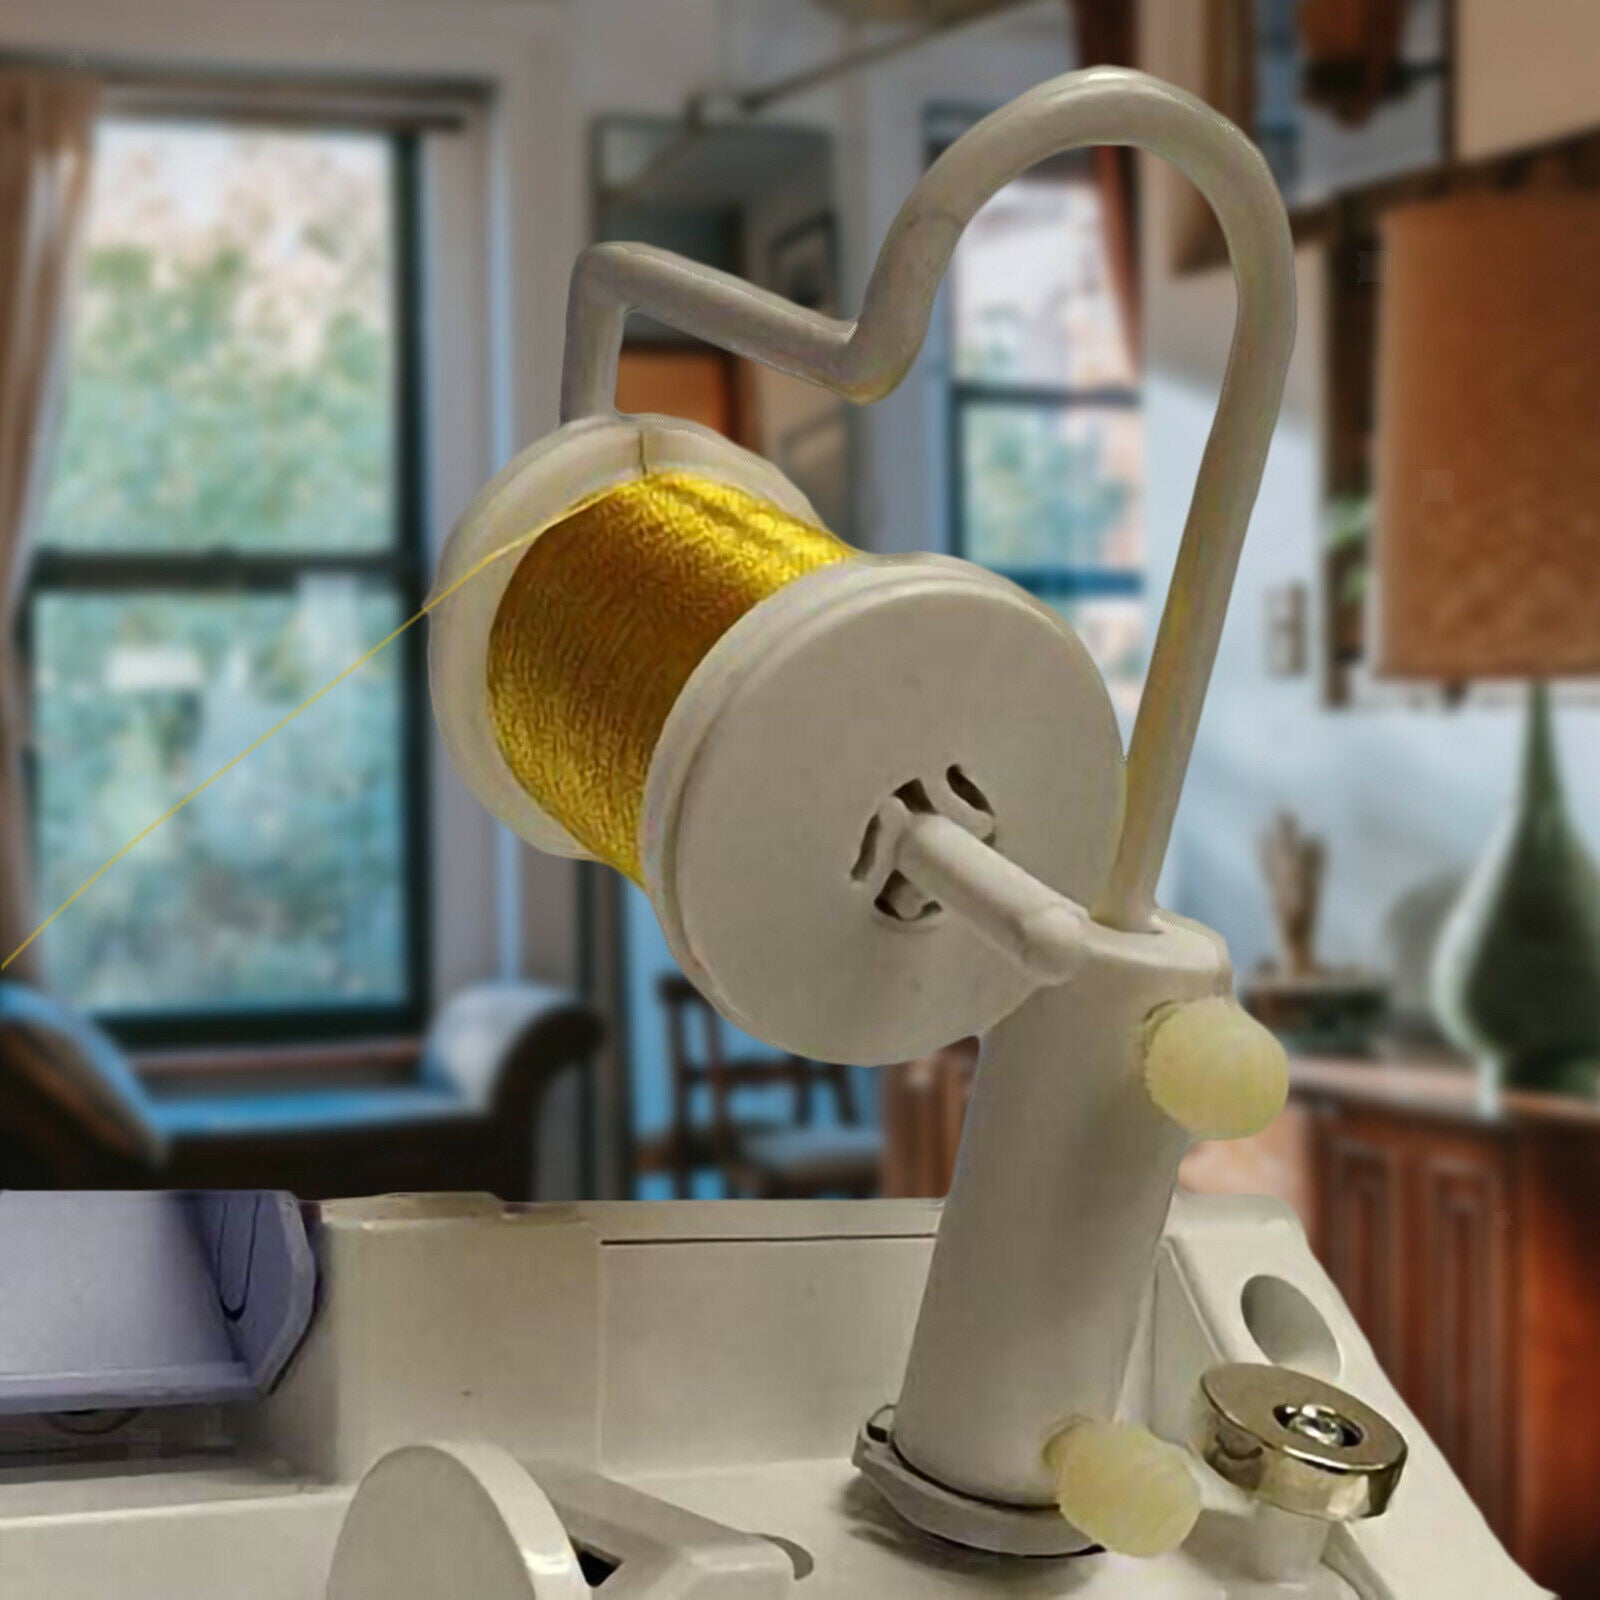 Sewing Machine External Thread Spool Holder Bracket Accessories Supplies